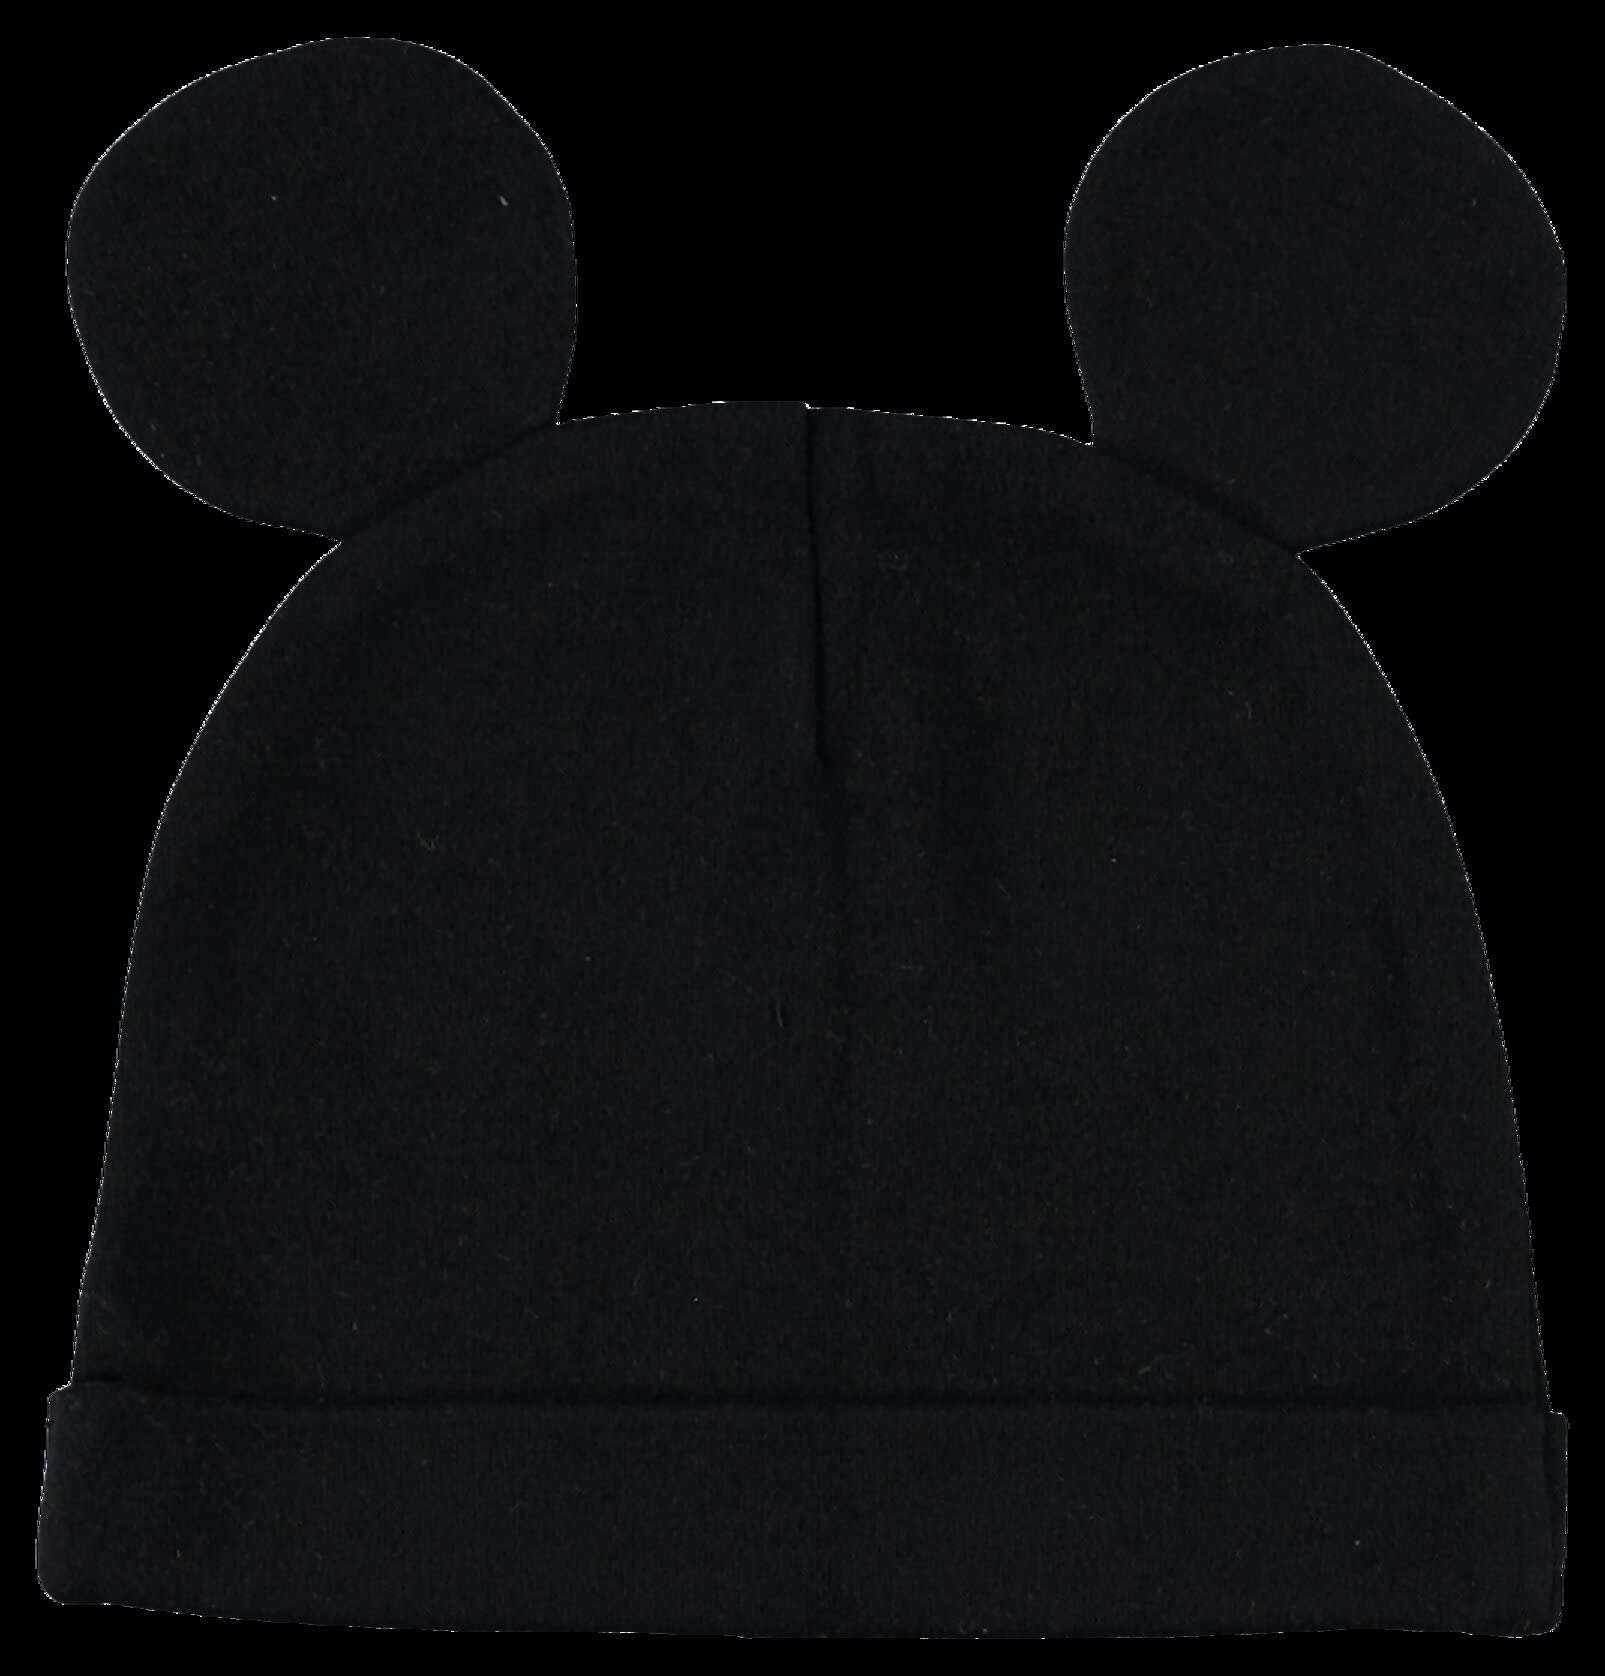 Disney Mickey Mouse 4 Piece Outfit Set: Bodysuit Pants Bib Hat